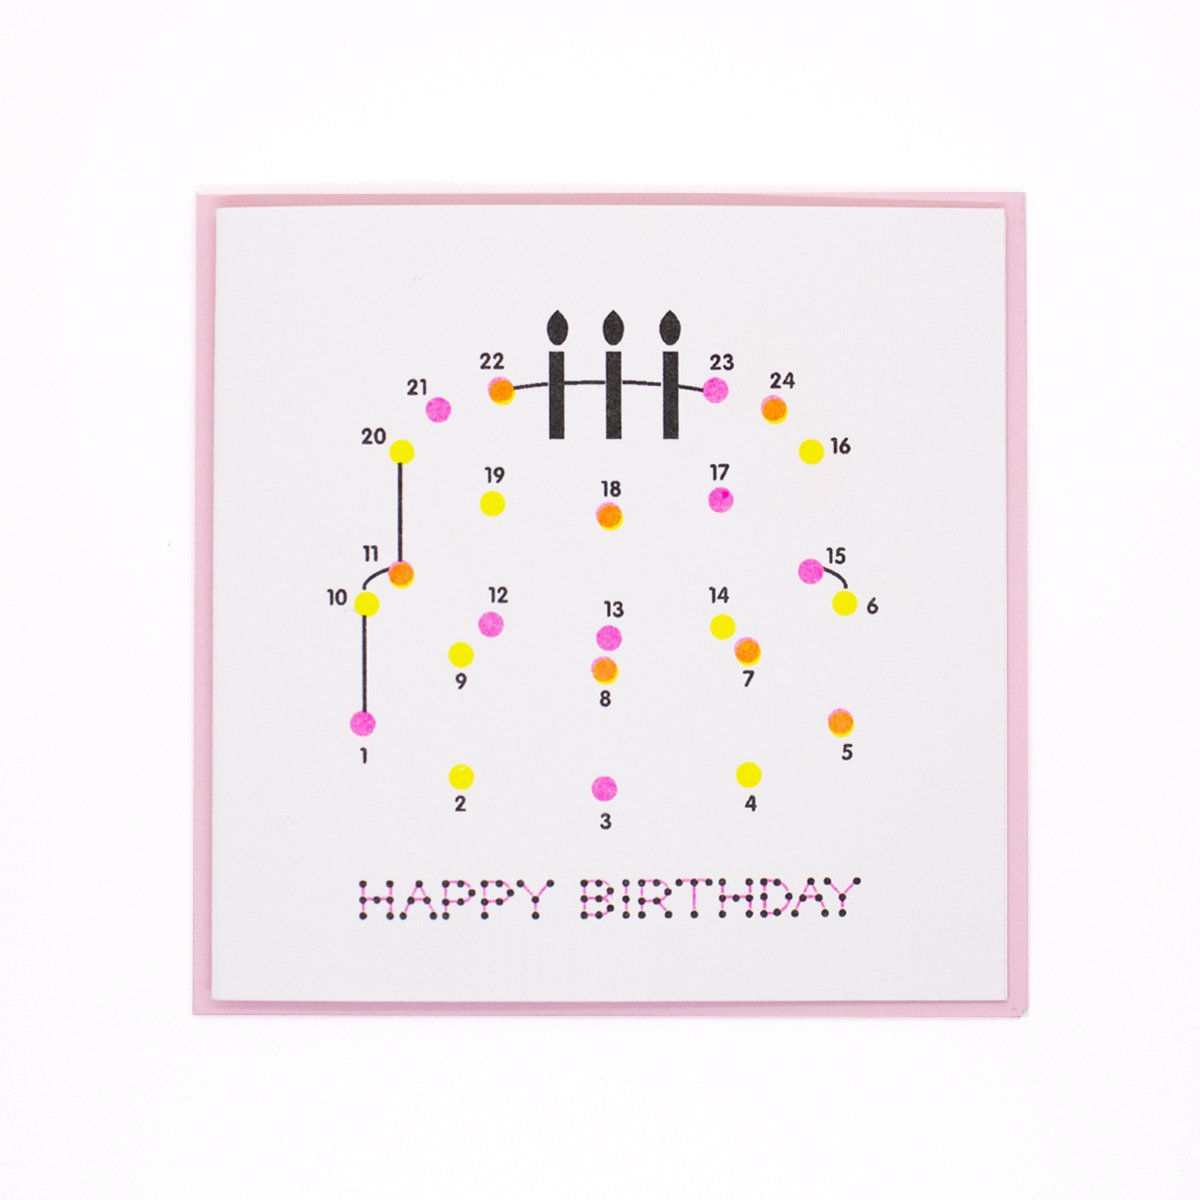 Bomull Press Birthday Card - Dot 2 Dot